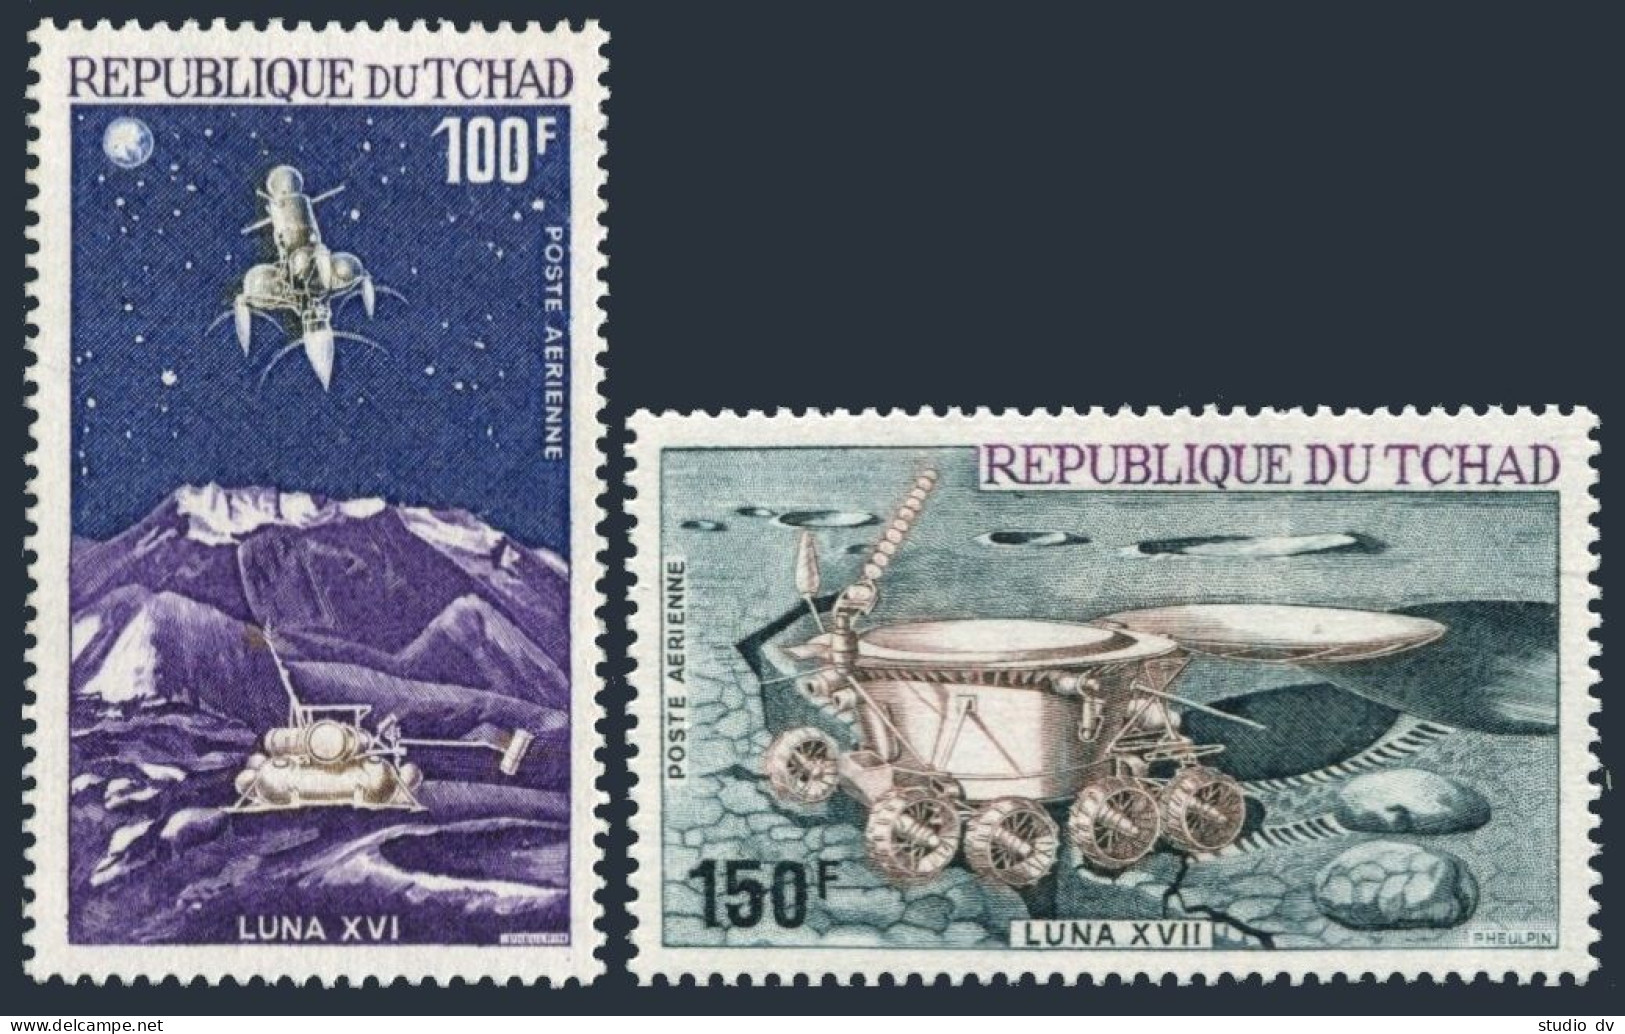 Chad C140-141, MNH. Michel 598-599. Russian Moon Mission, Lunokhod, Luna-16. - Tchad (1960-...)